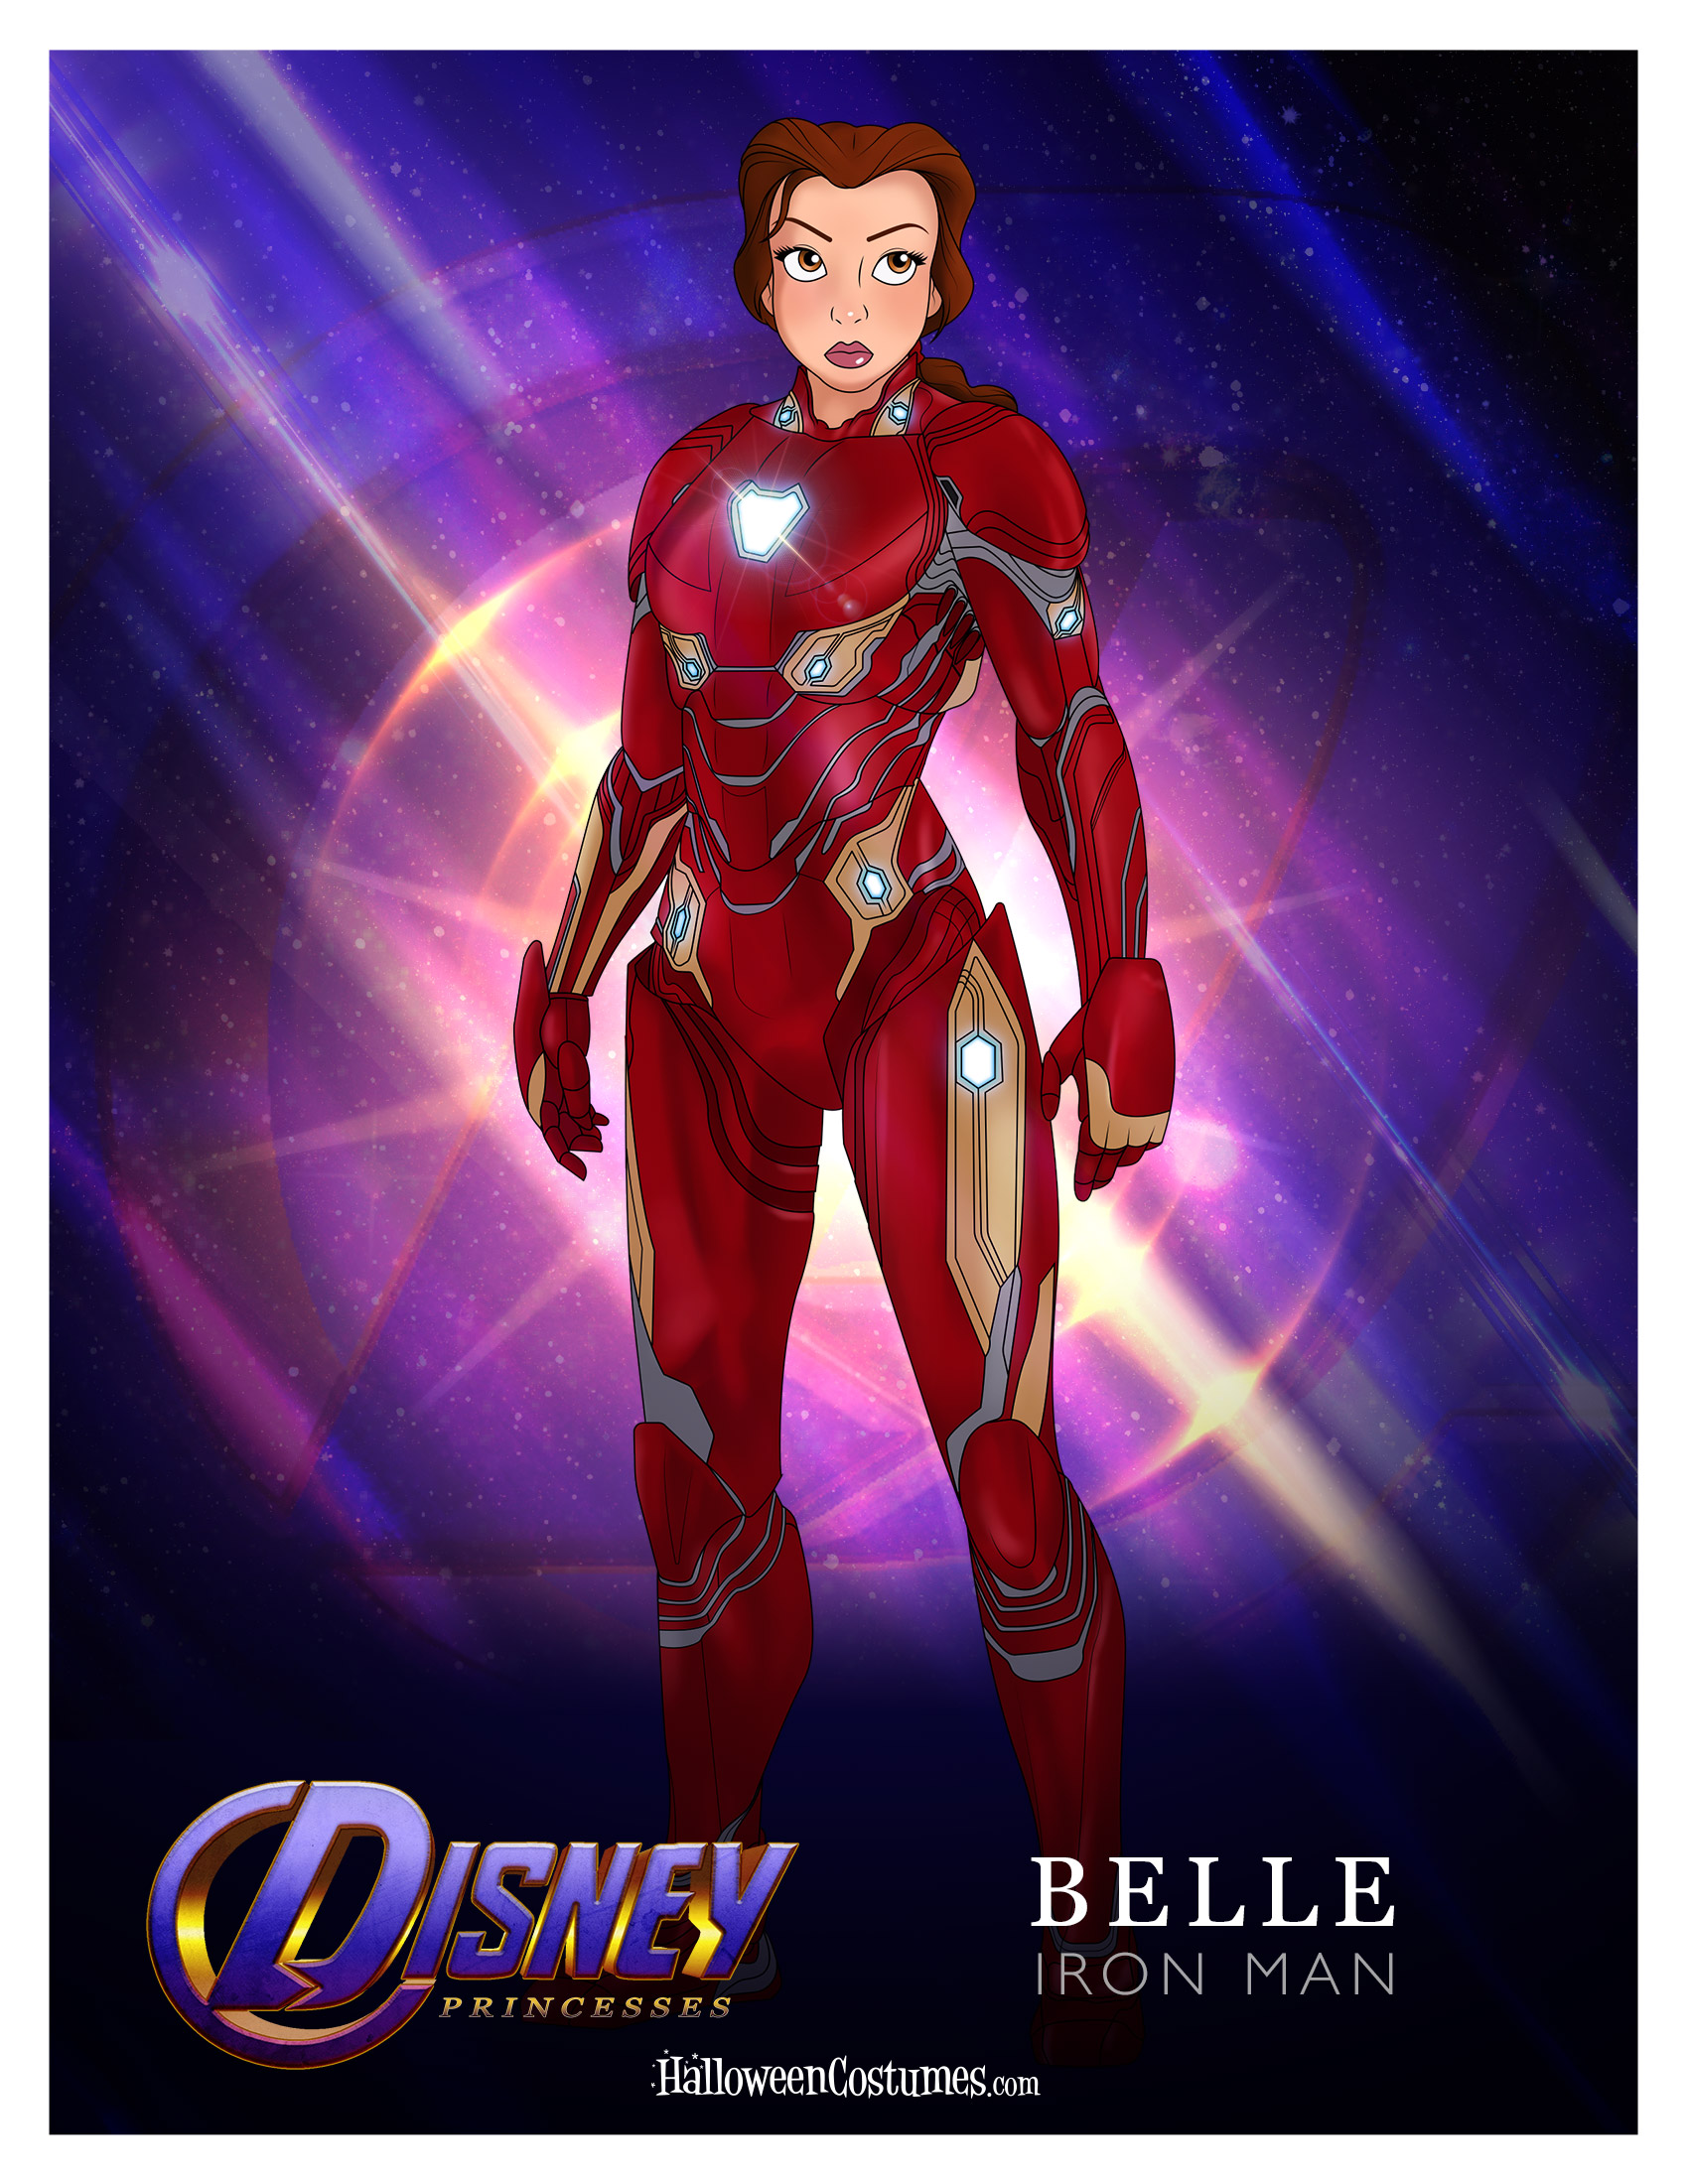 Princess Belle as Iron Man